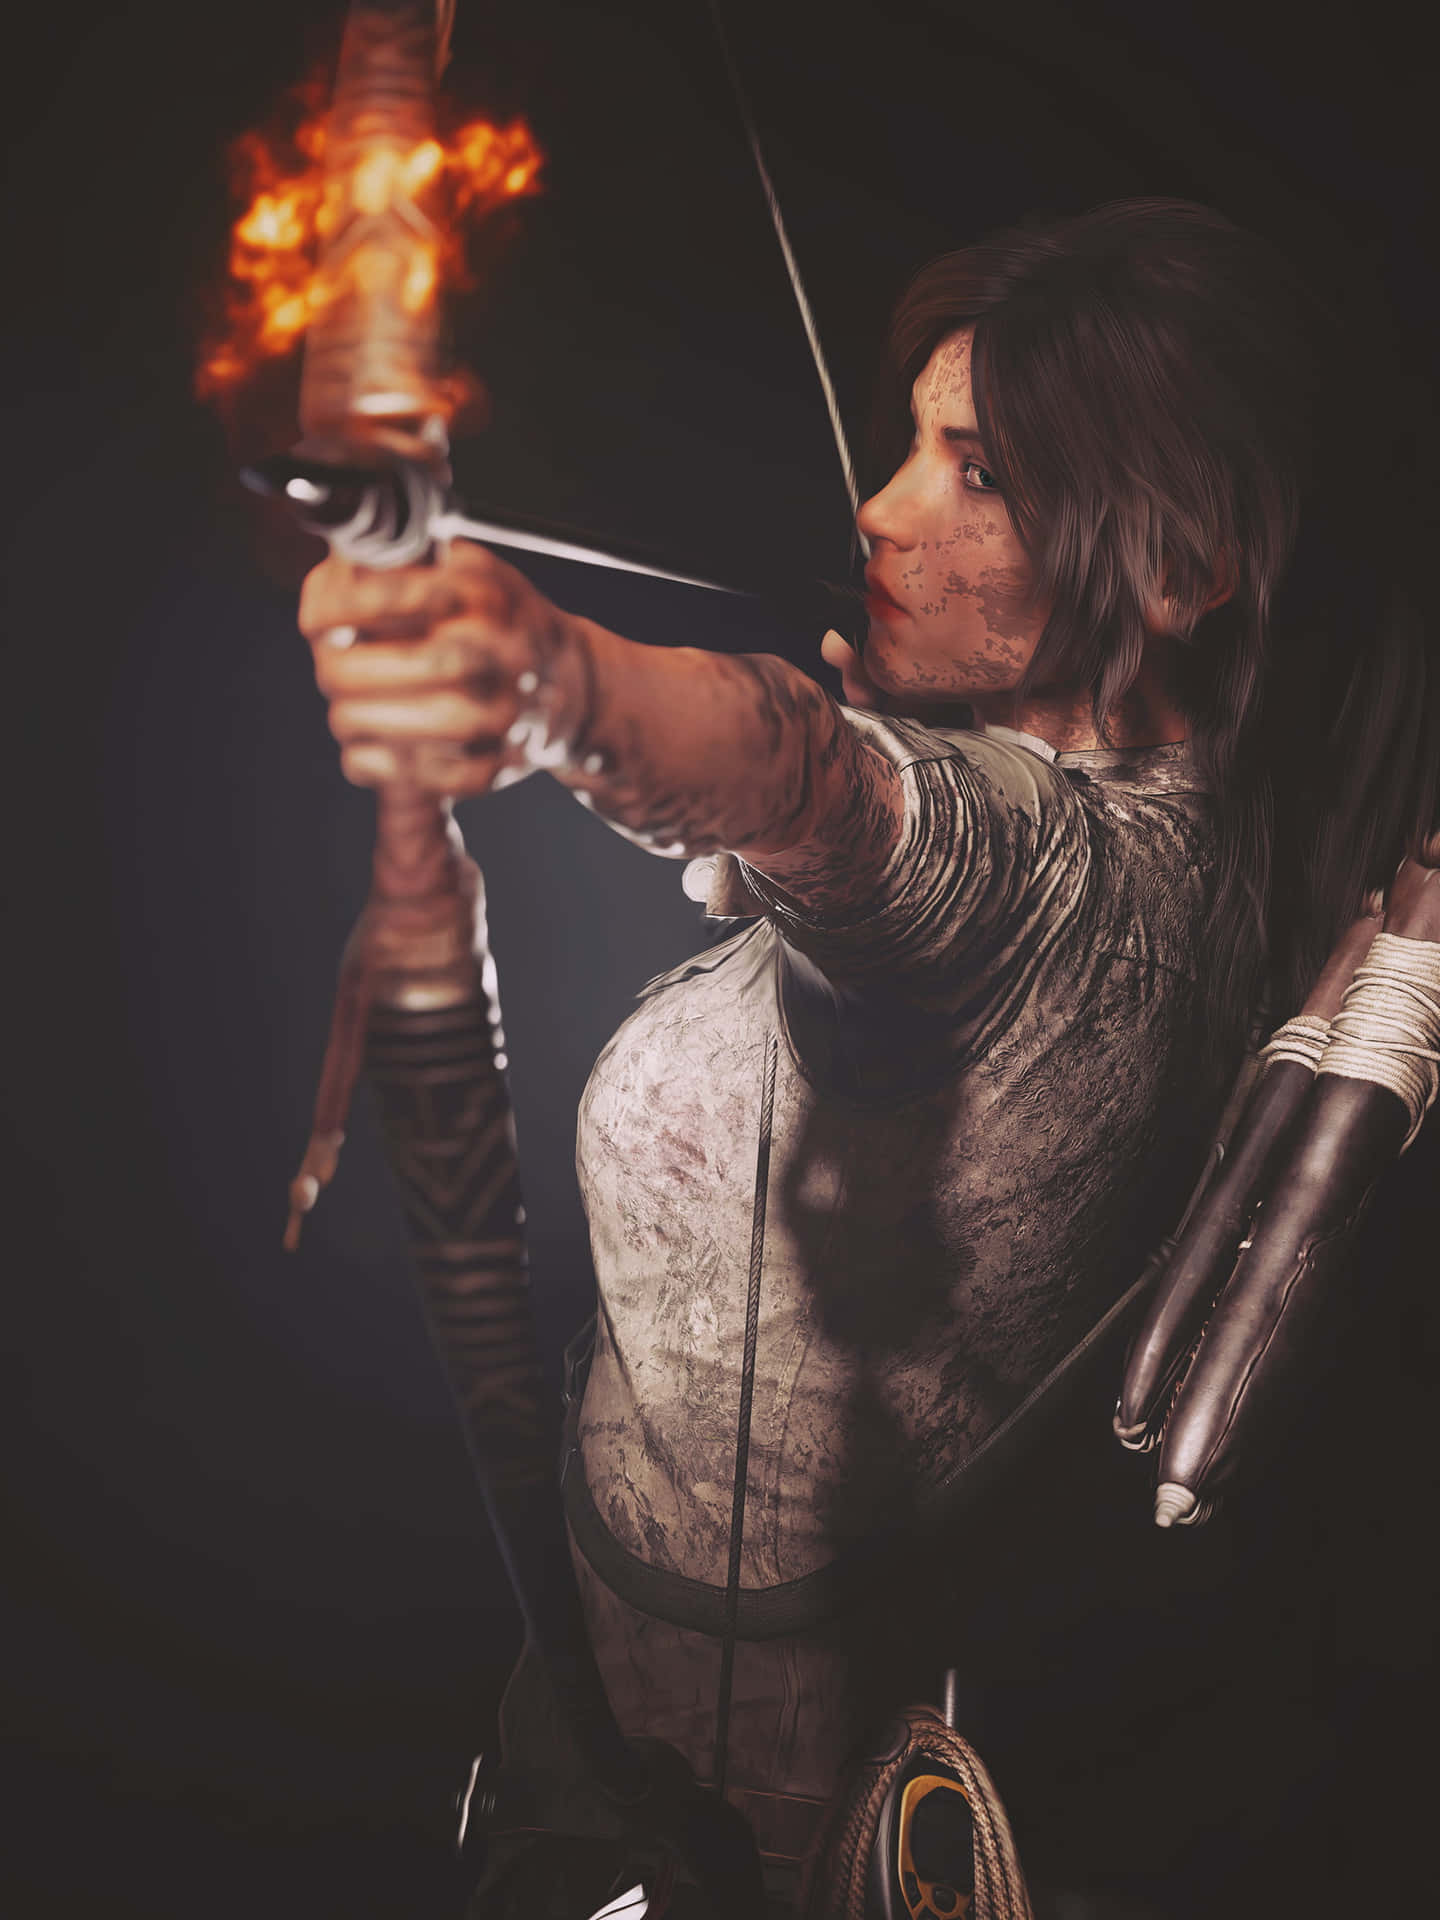 Androidrise Of The Tomb Raider-bakgrund: Flammande.